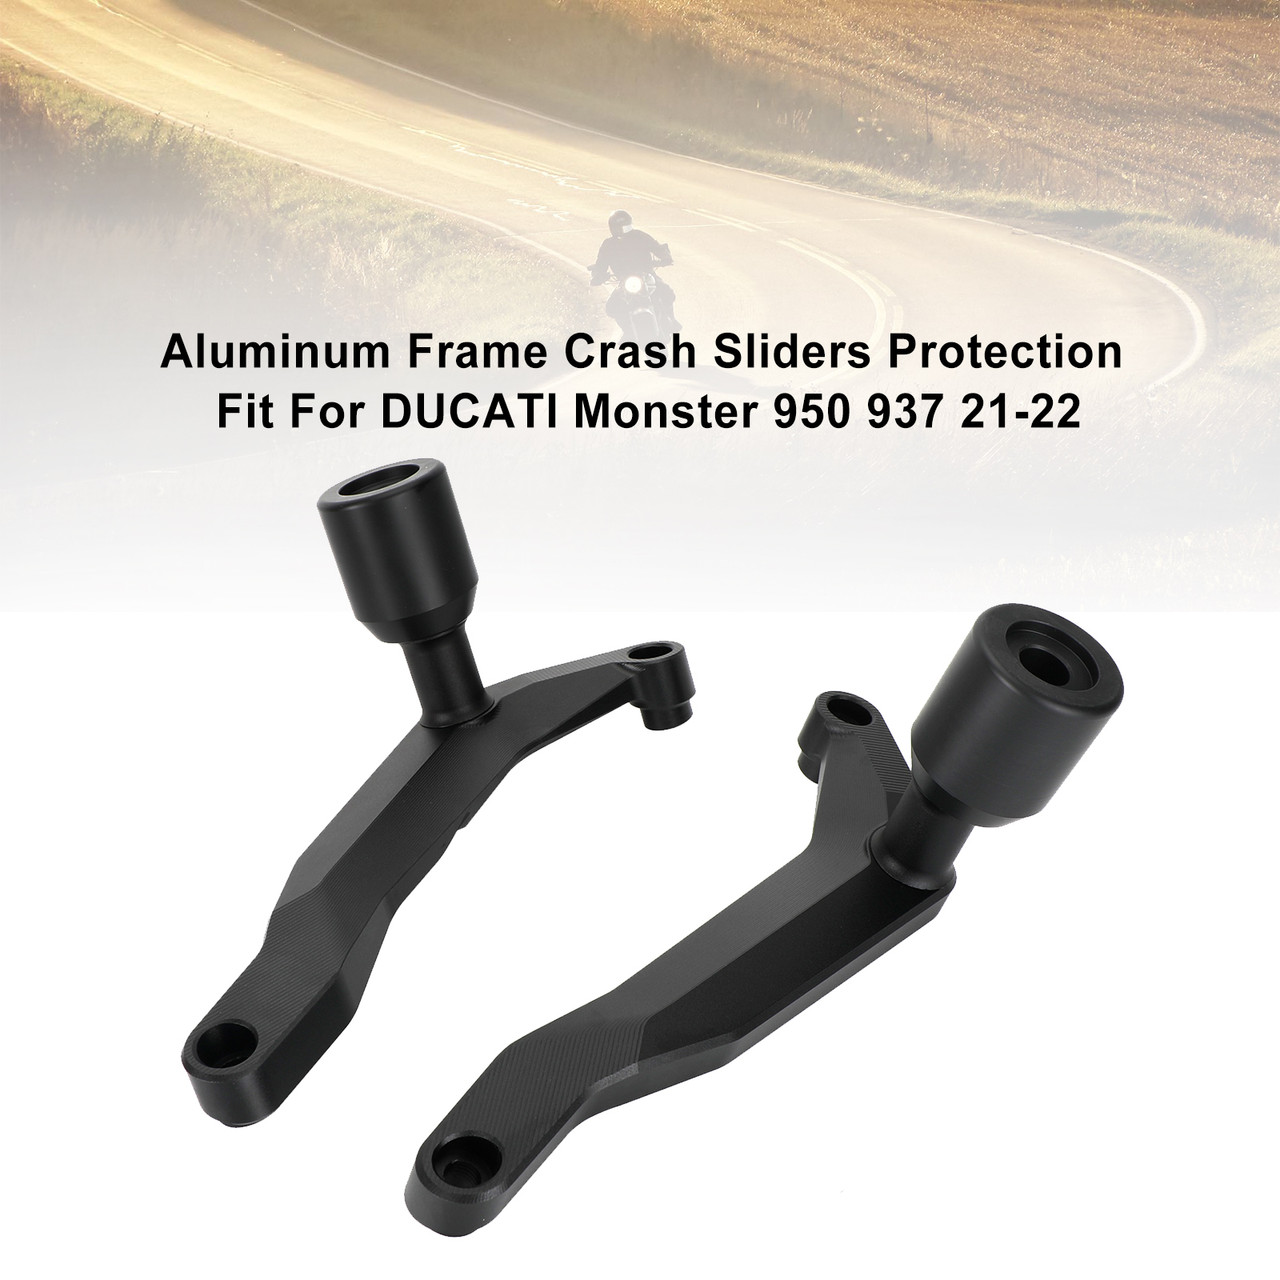 Aluminum Frame Crash Sliders Protection Fit For Ducati Monster 950 937 21-22